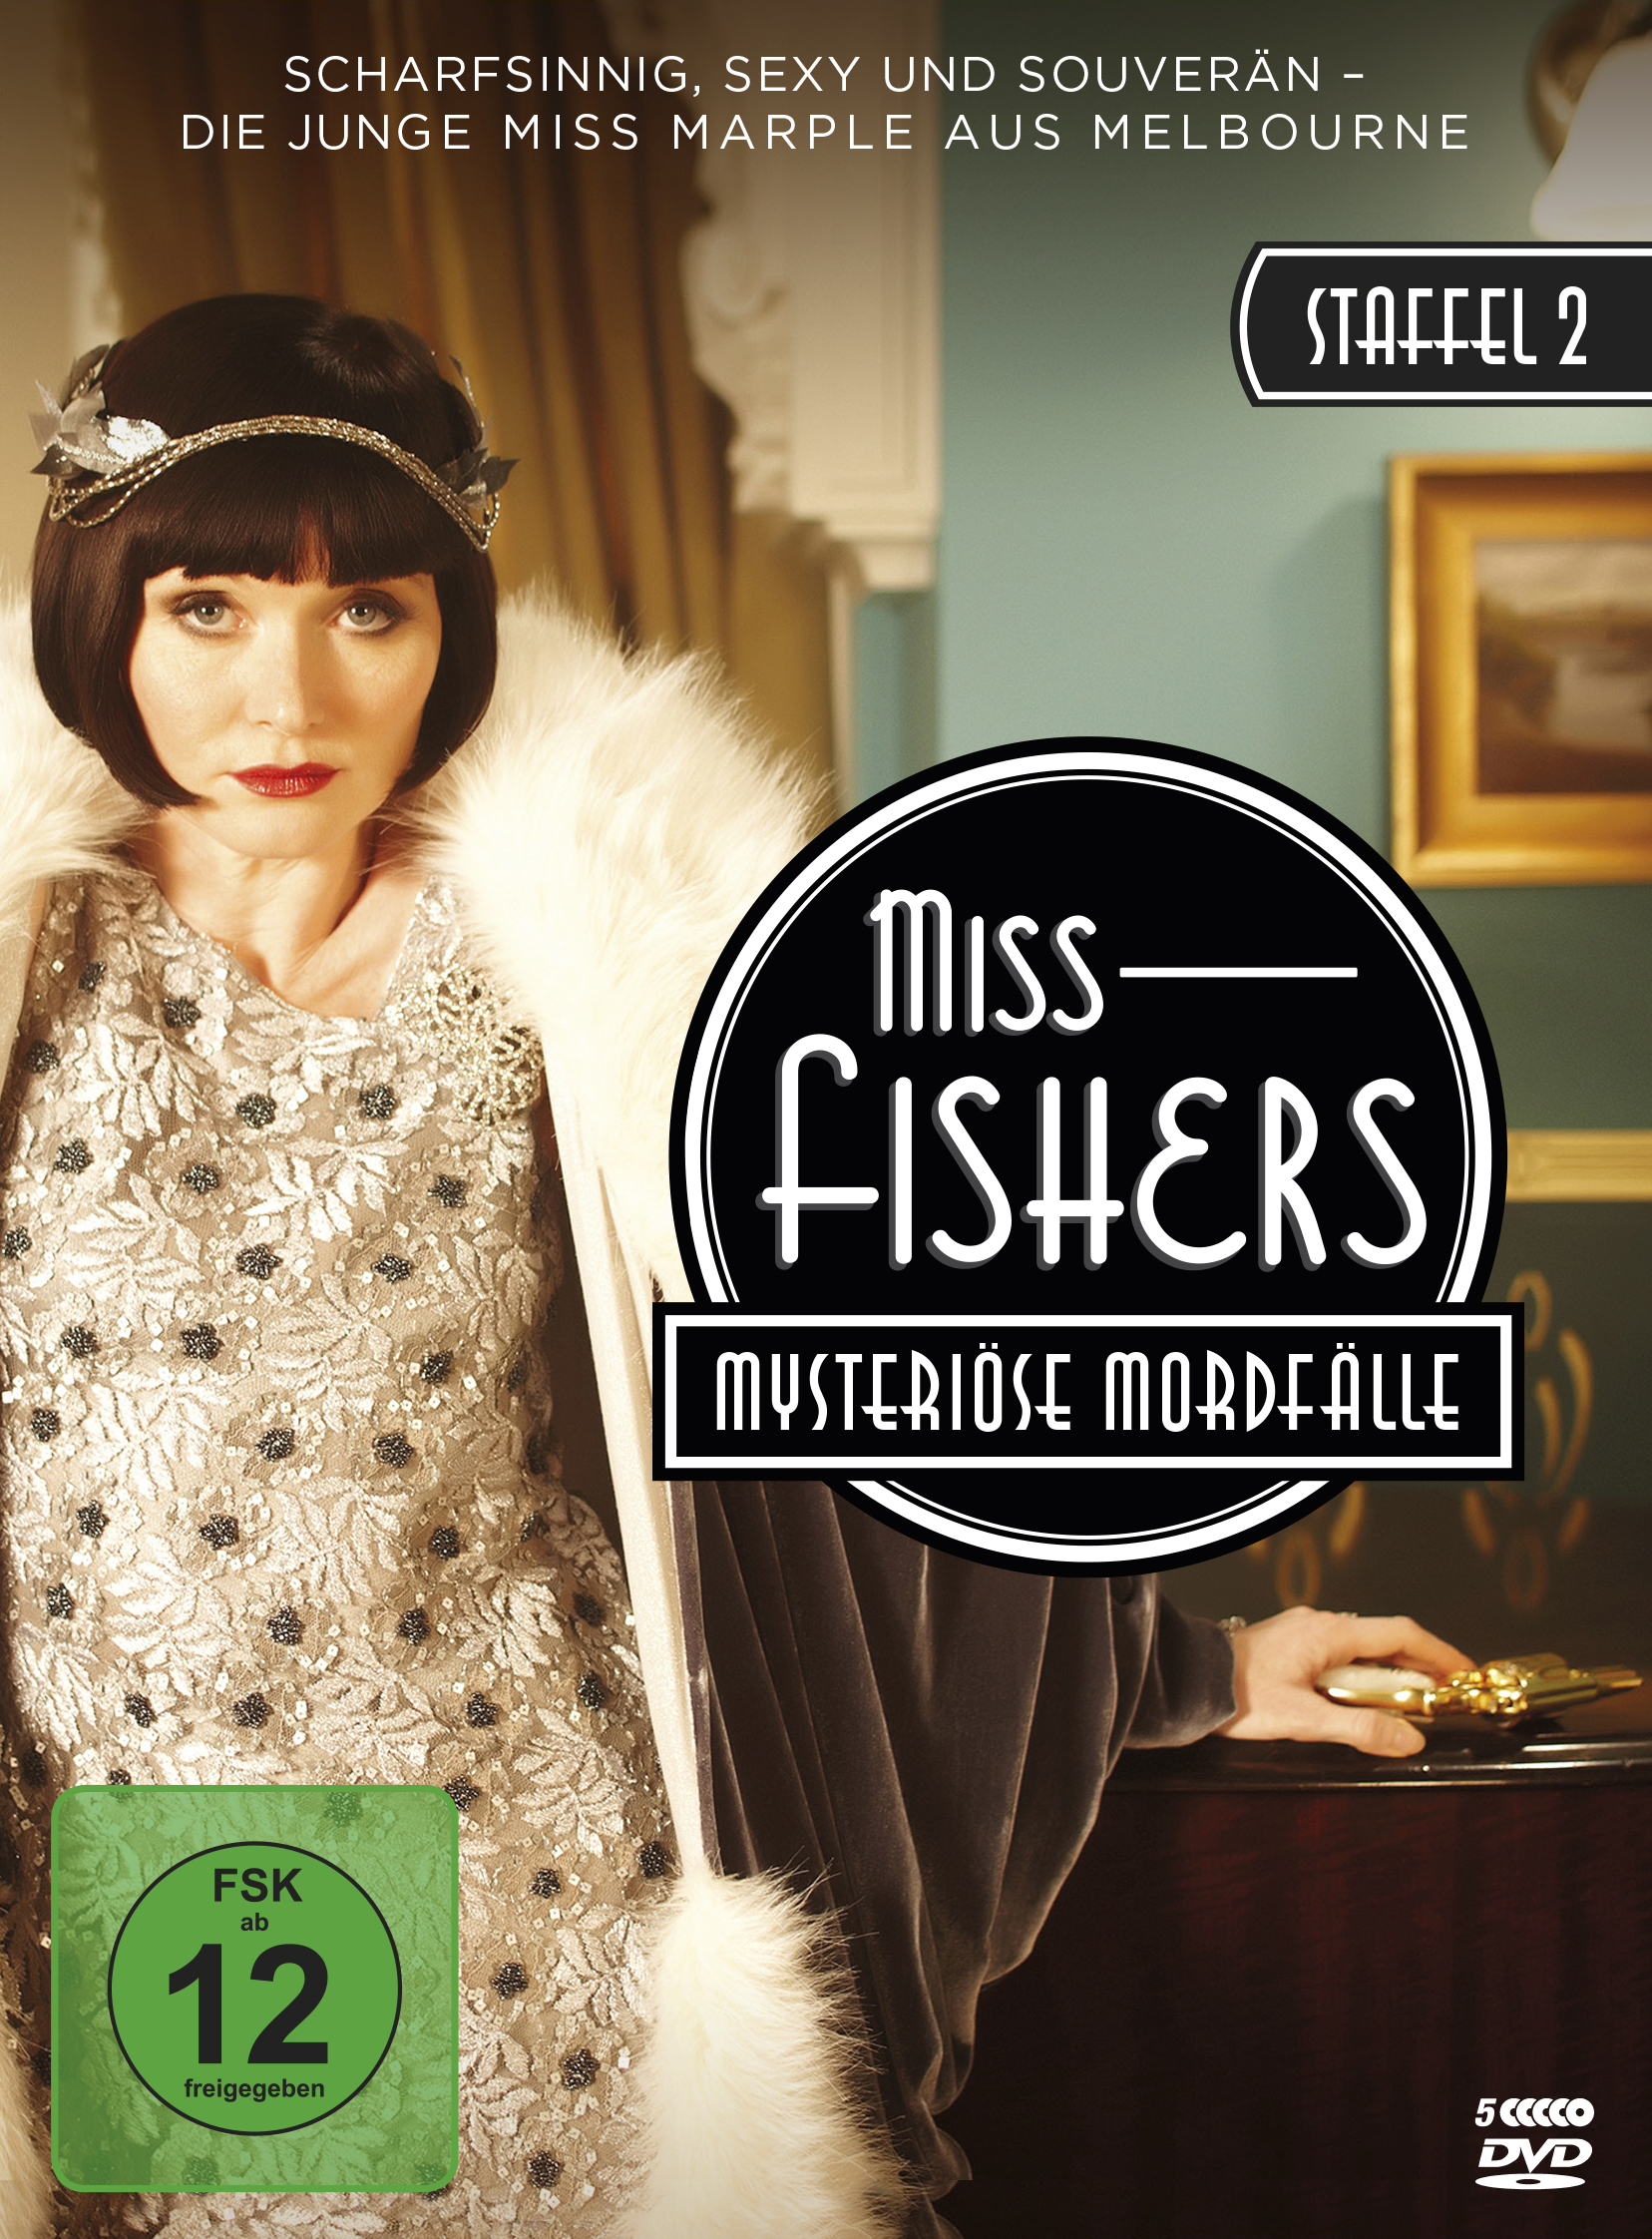 - Mordfälle mysteriöse 2 Staffel Fishers DVD Miss